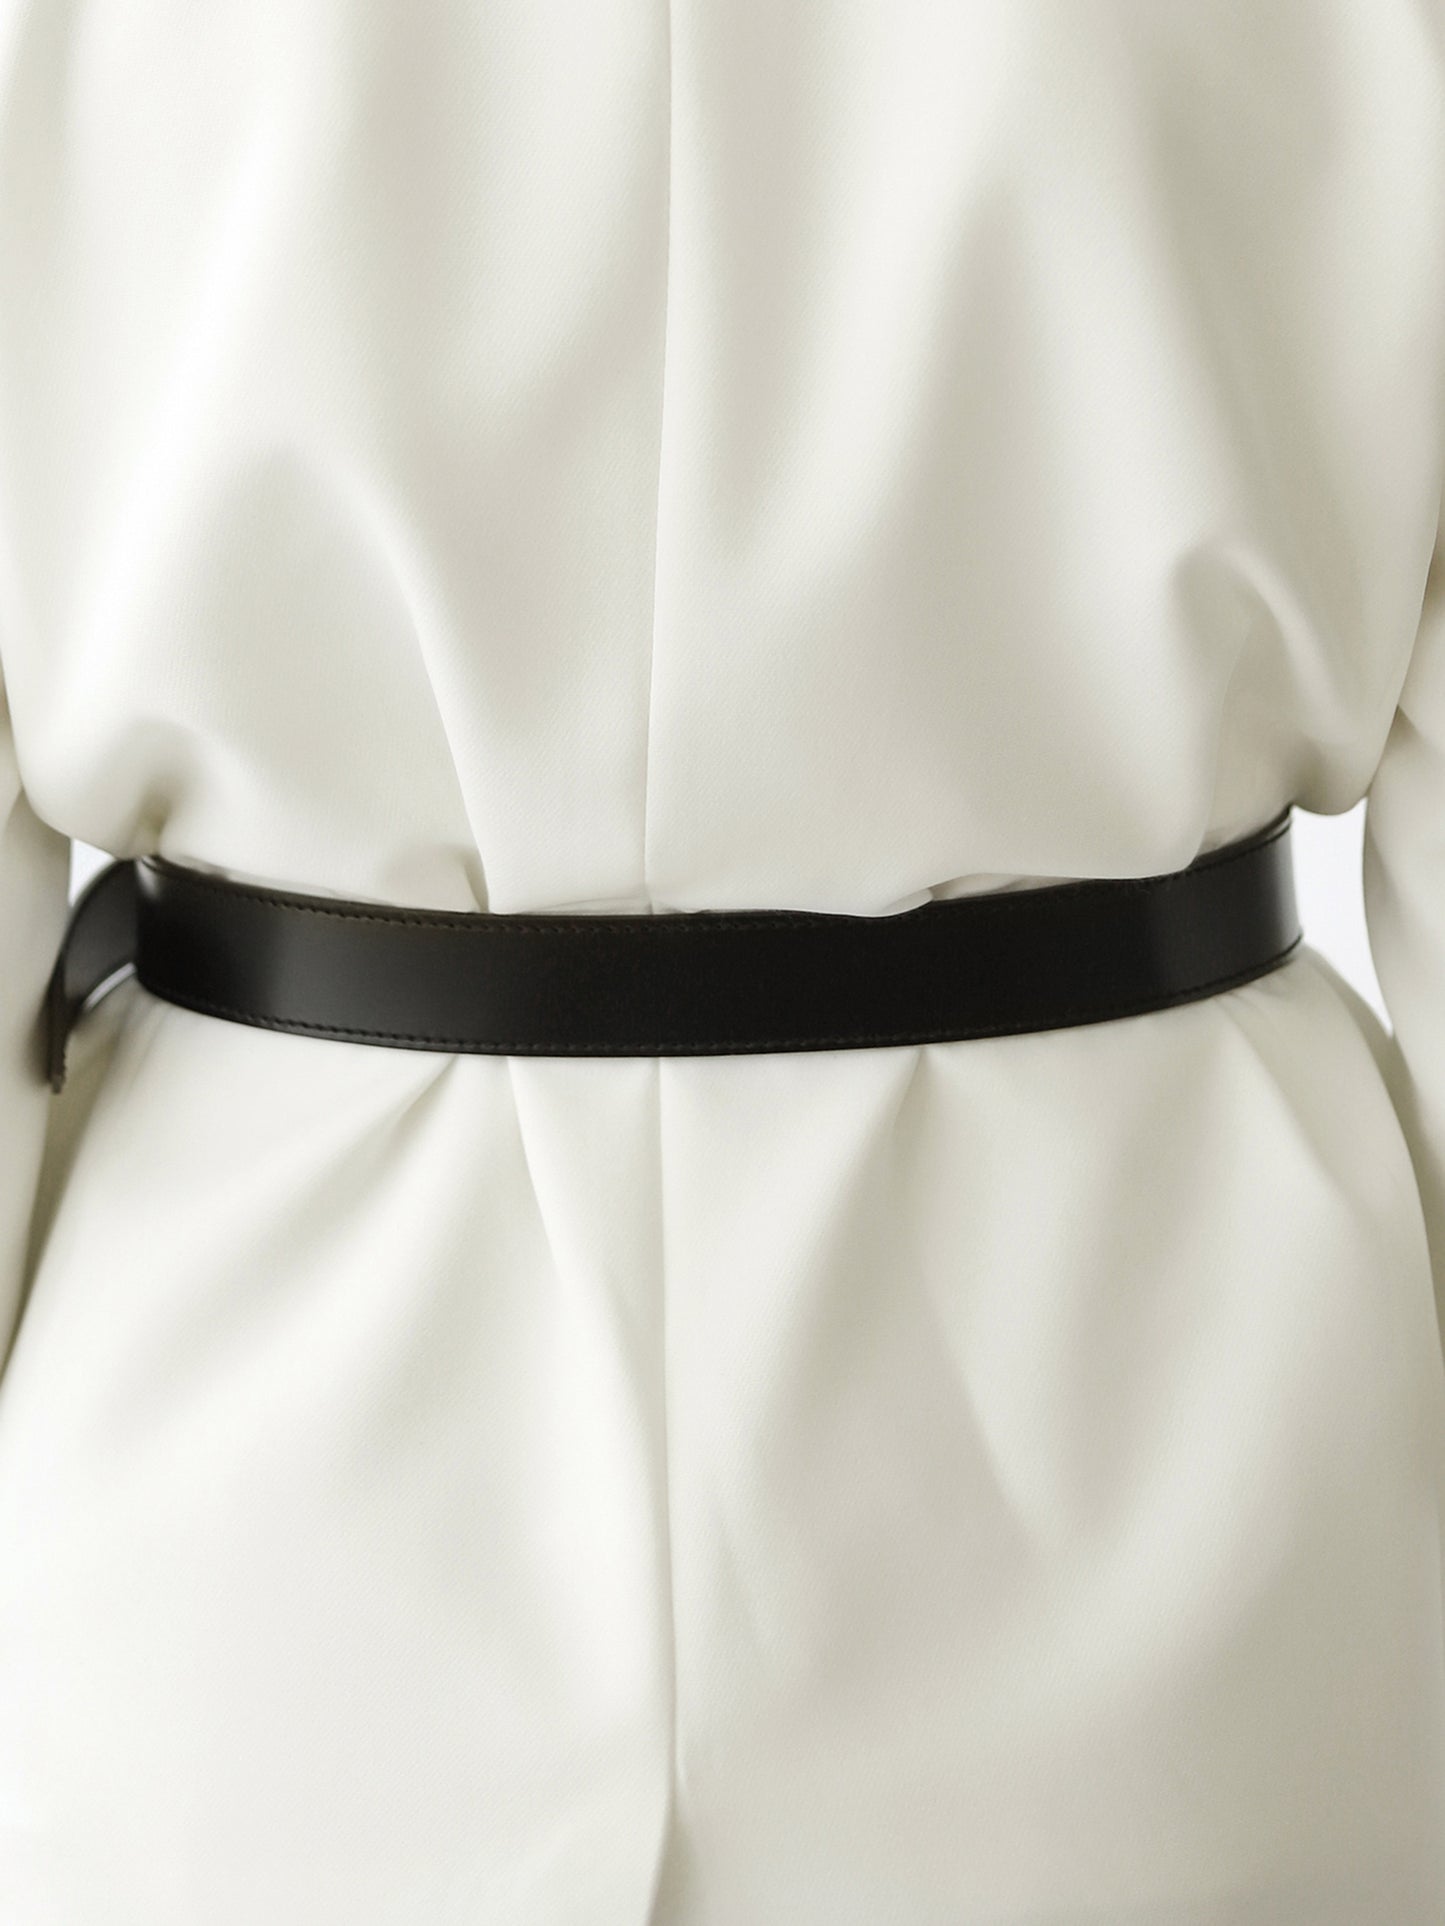 Back view of black leather belt.